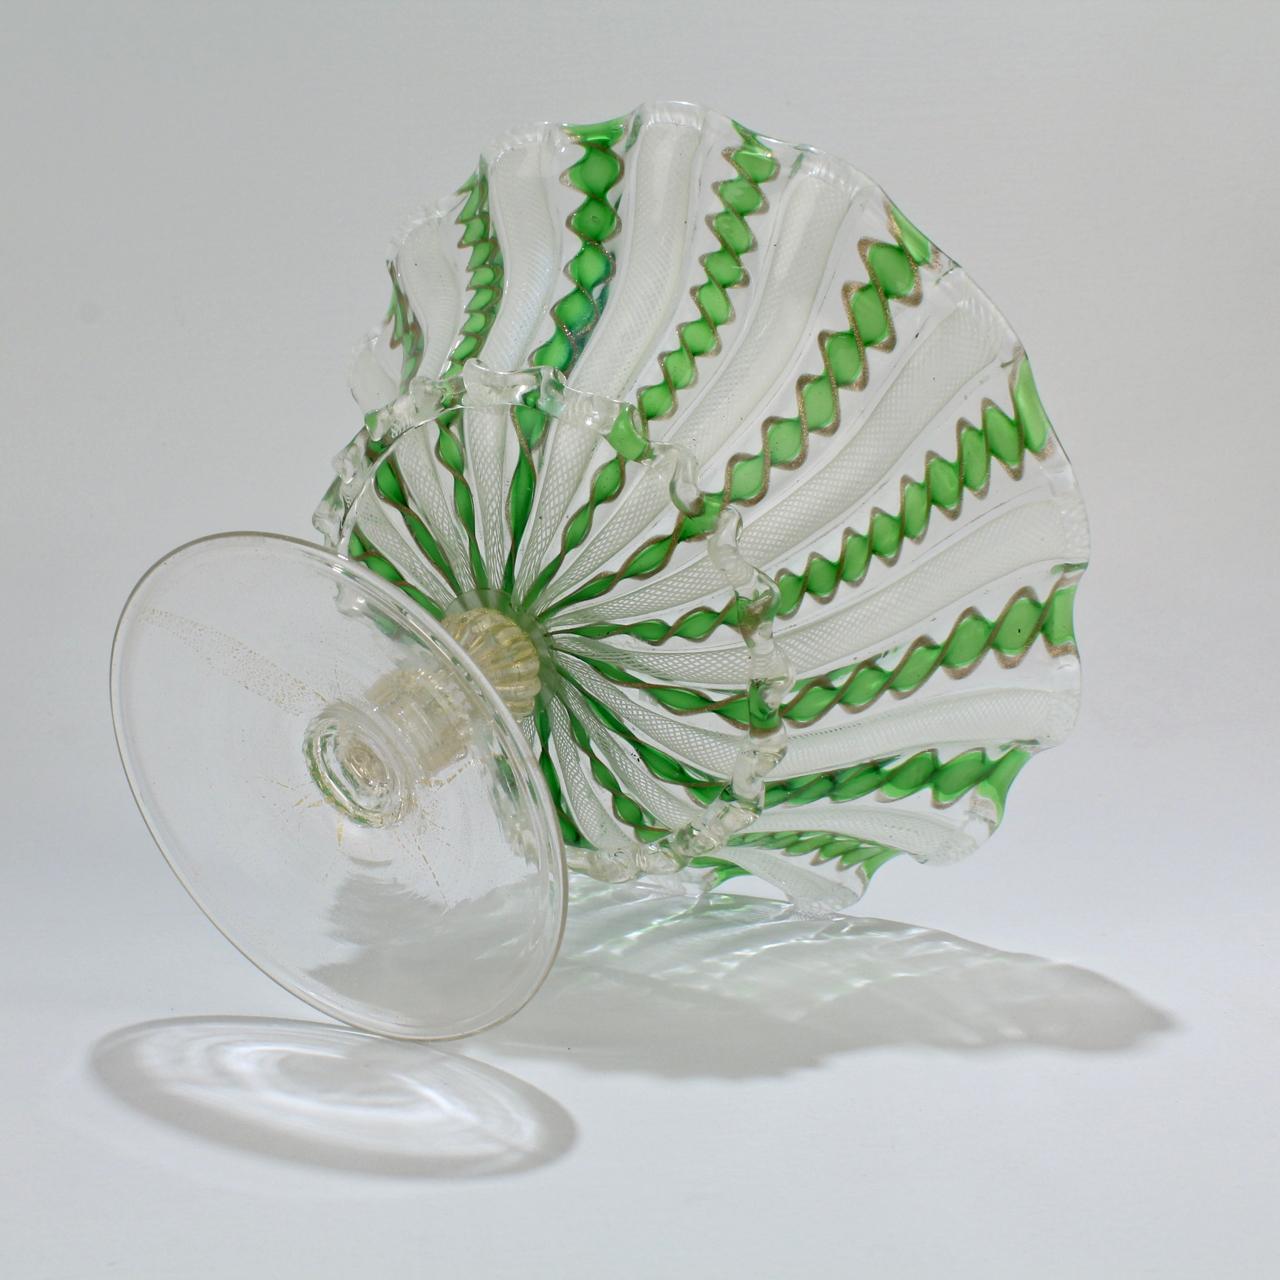 Italian Venetian Glass Green White and Copper Latticino Swirl Footed Bowl or Compote